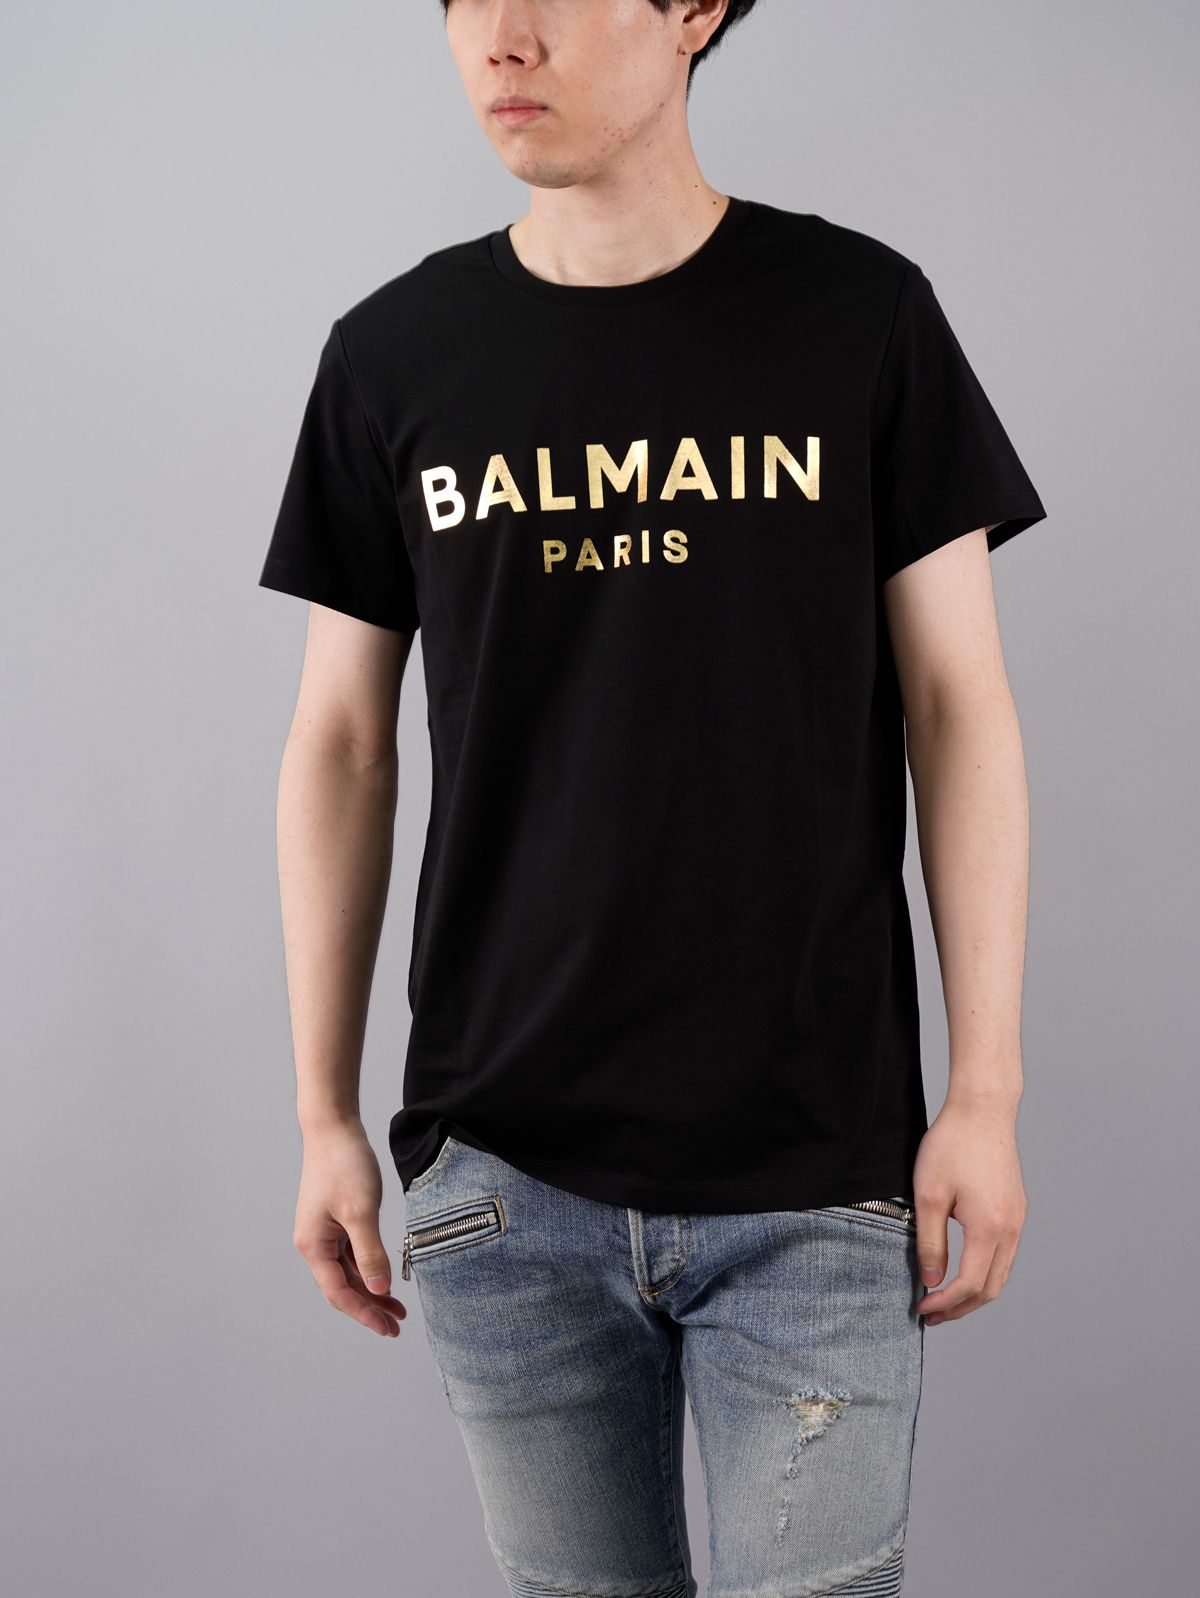 BALMAIN - 【ラスト1点】Black Cotton T-shirt Gold Balmain Paris